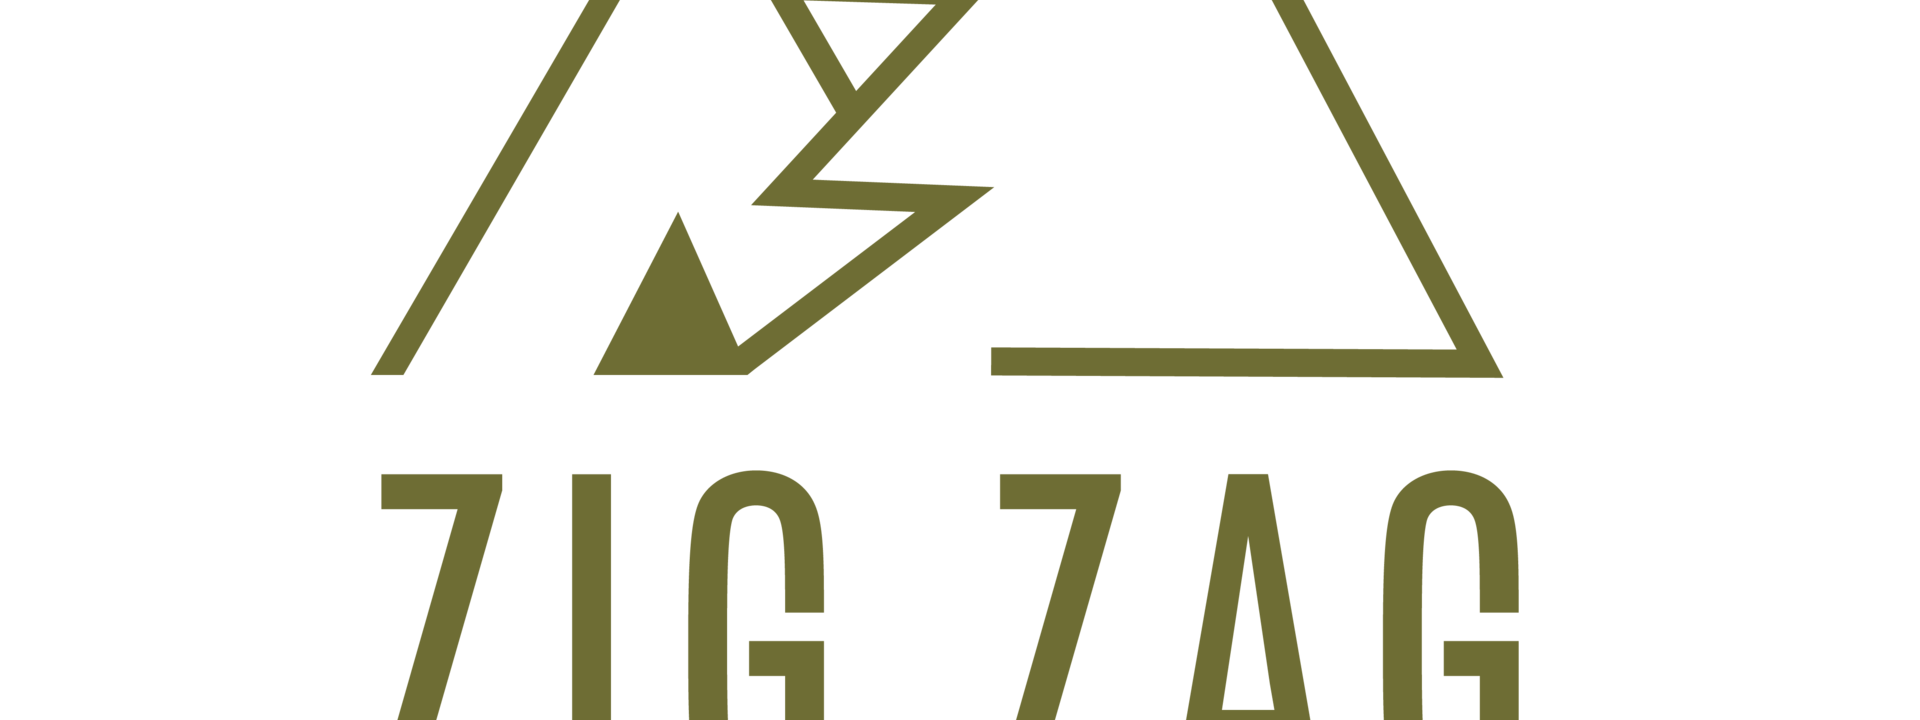 zig-zag-logo-full-green.png